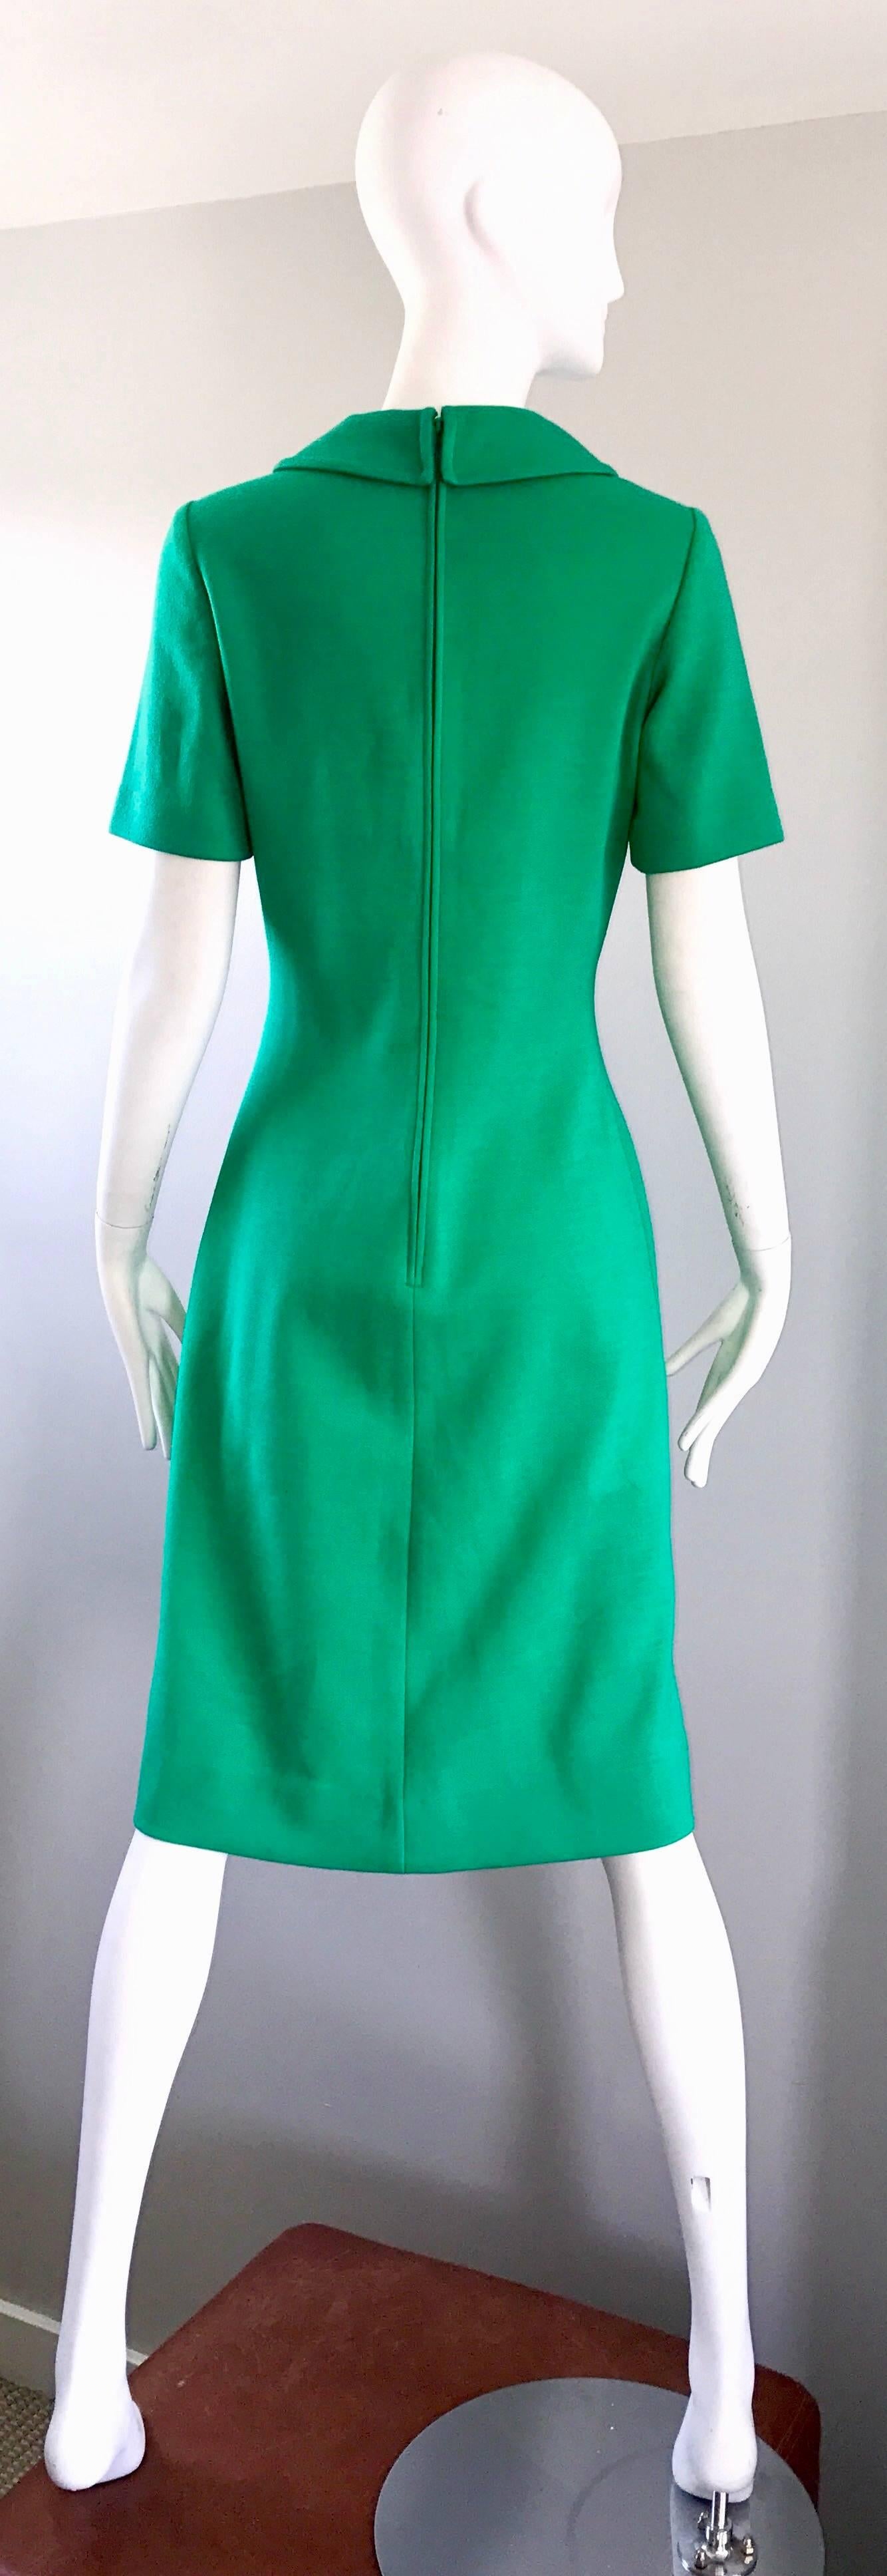 1960s green dress